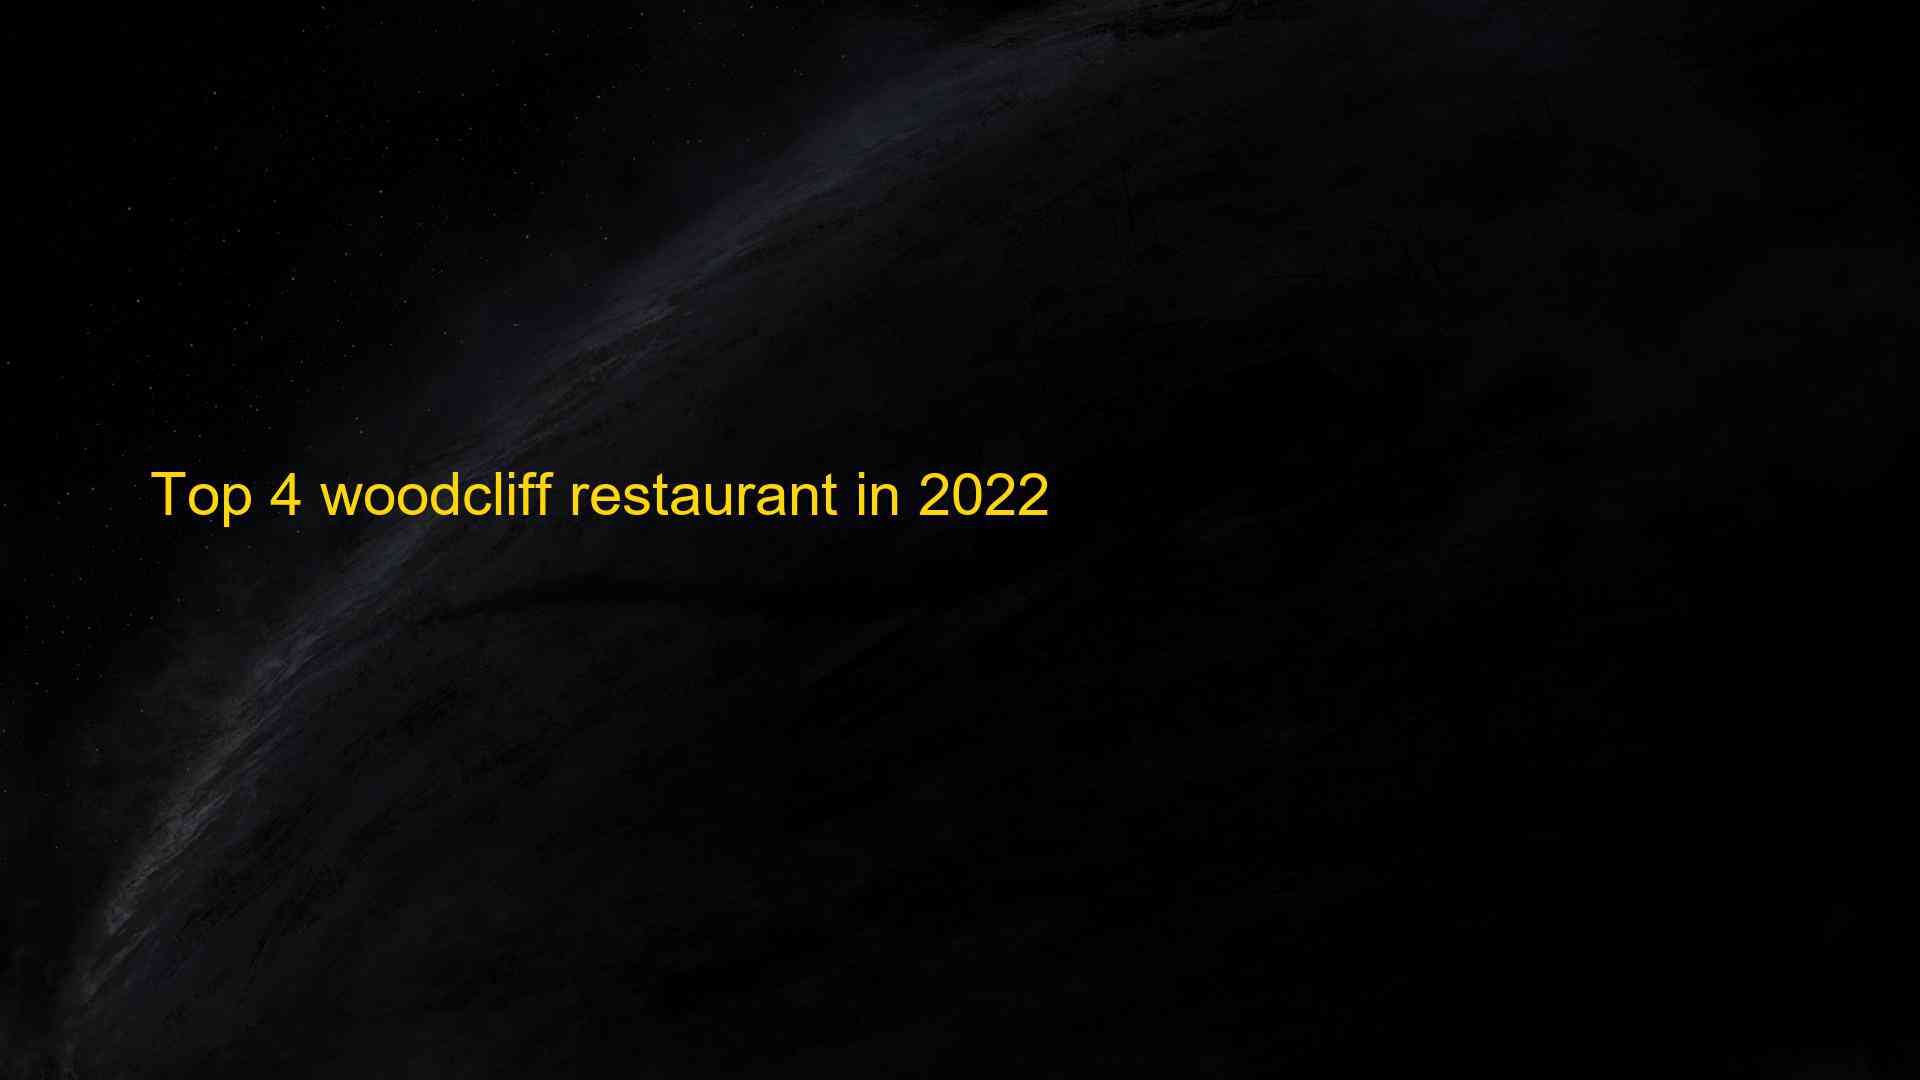 Top 4 woodcliff restaurant in 2022 1663208439